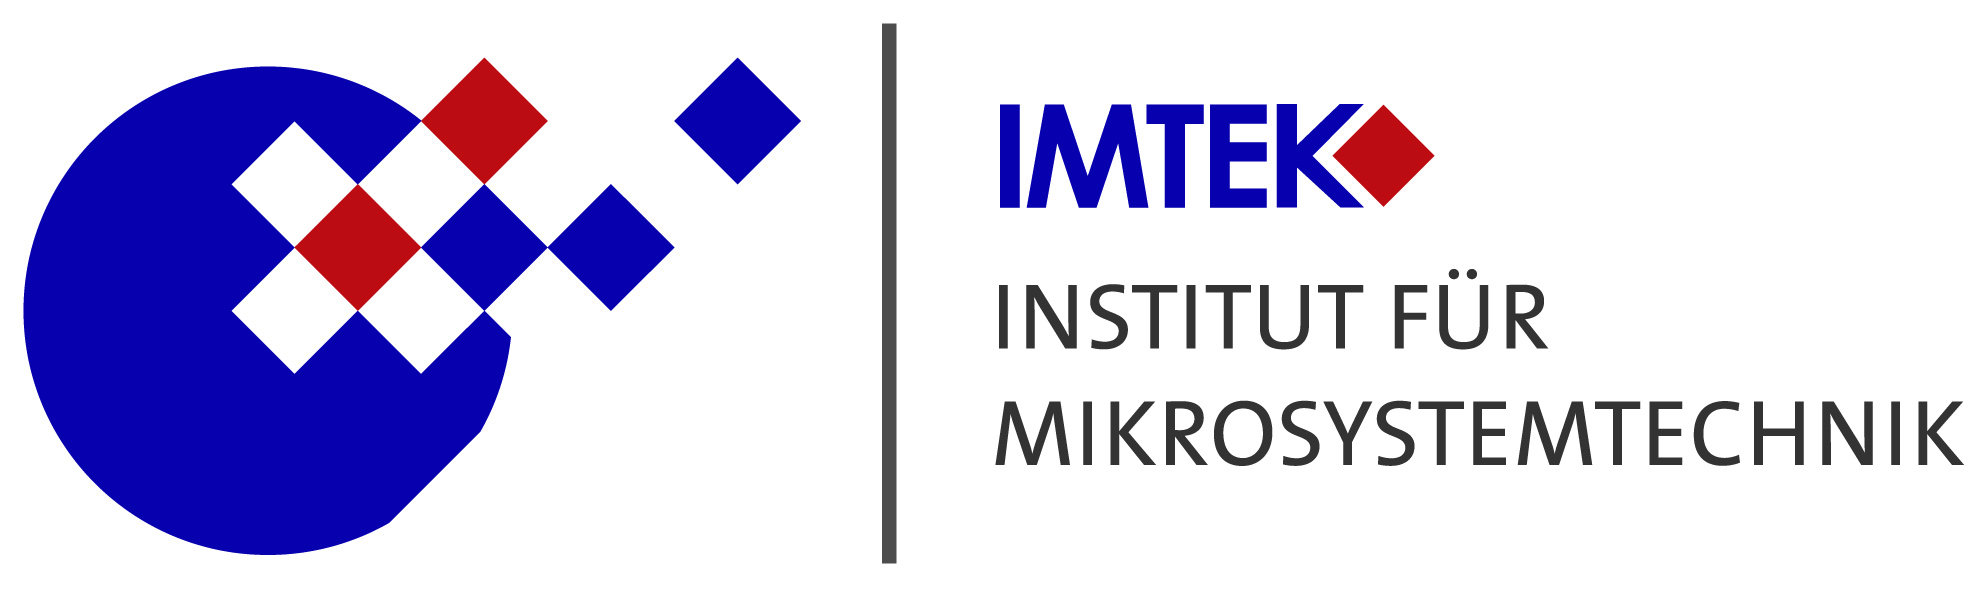 IMTEK Logo Slogan deutsch